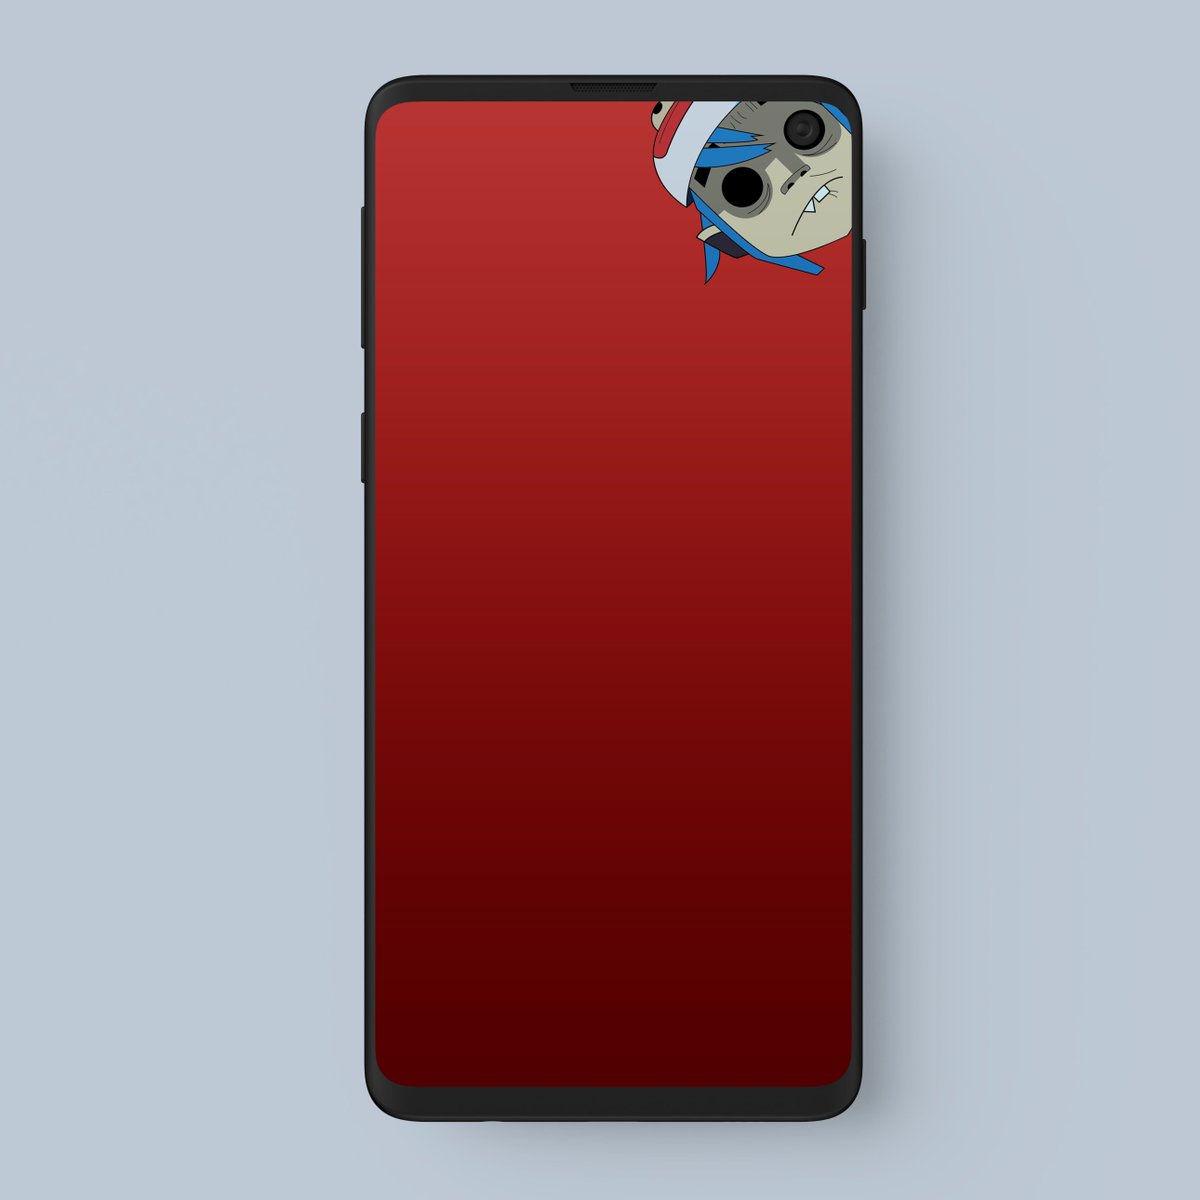 fondo de pantalla de gorillaz,caja del teléfono móvil,rojo,accesorios para teléfono móvil,teléfono móvil,artilugio